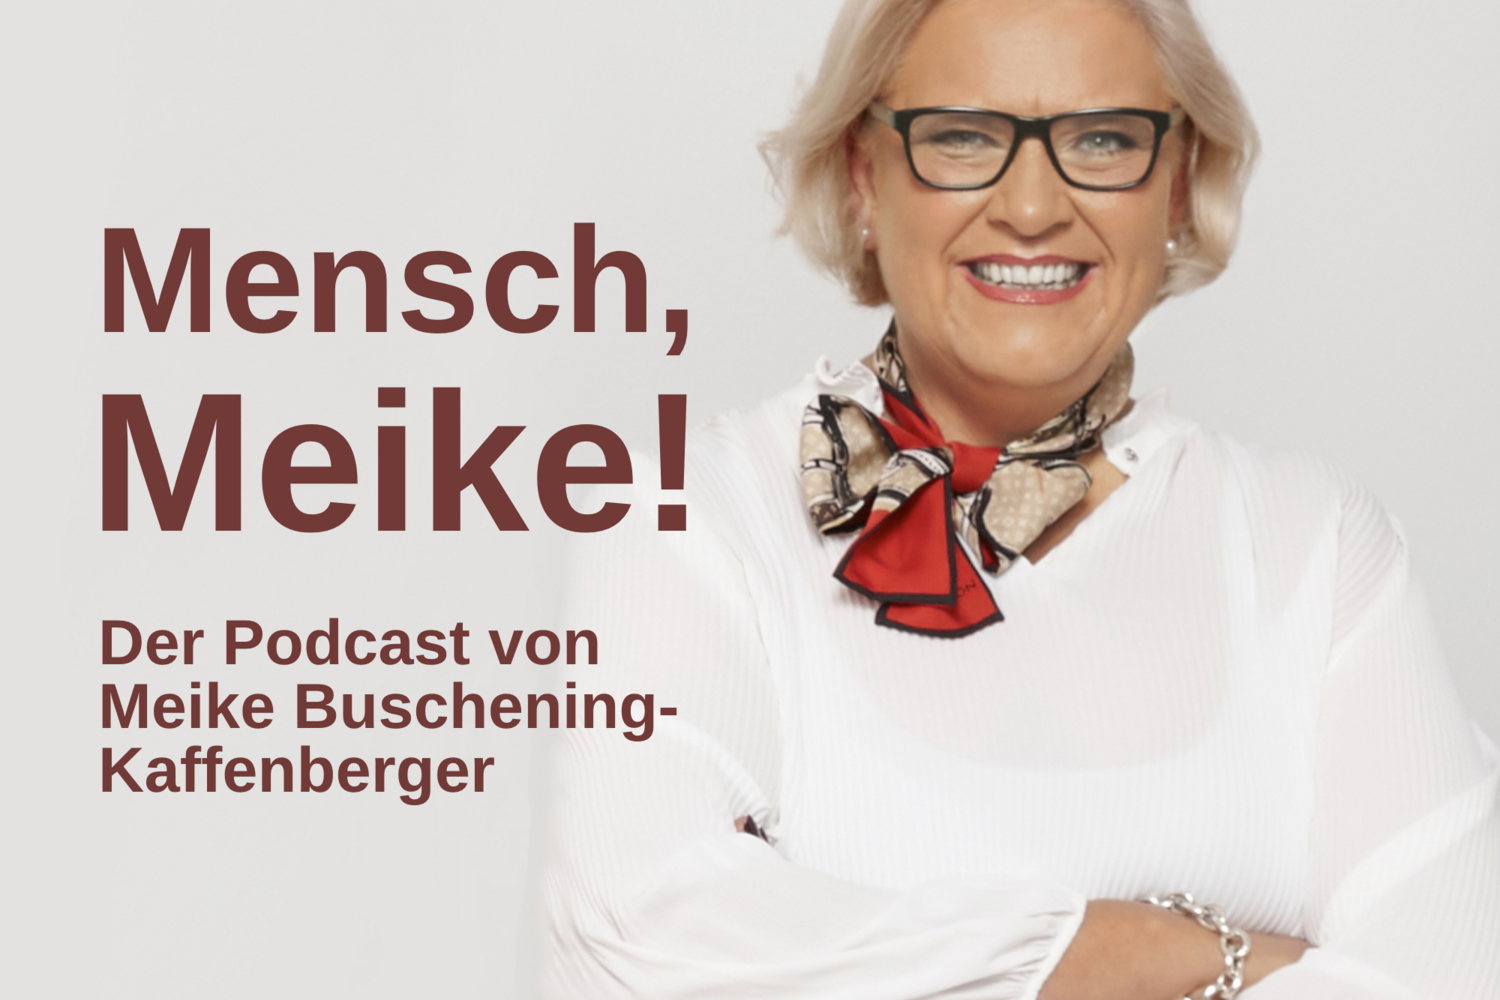 Podcast "Mensch, Meike!"